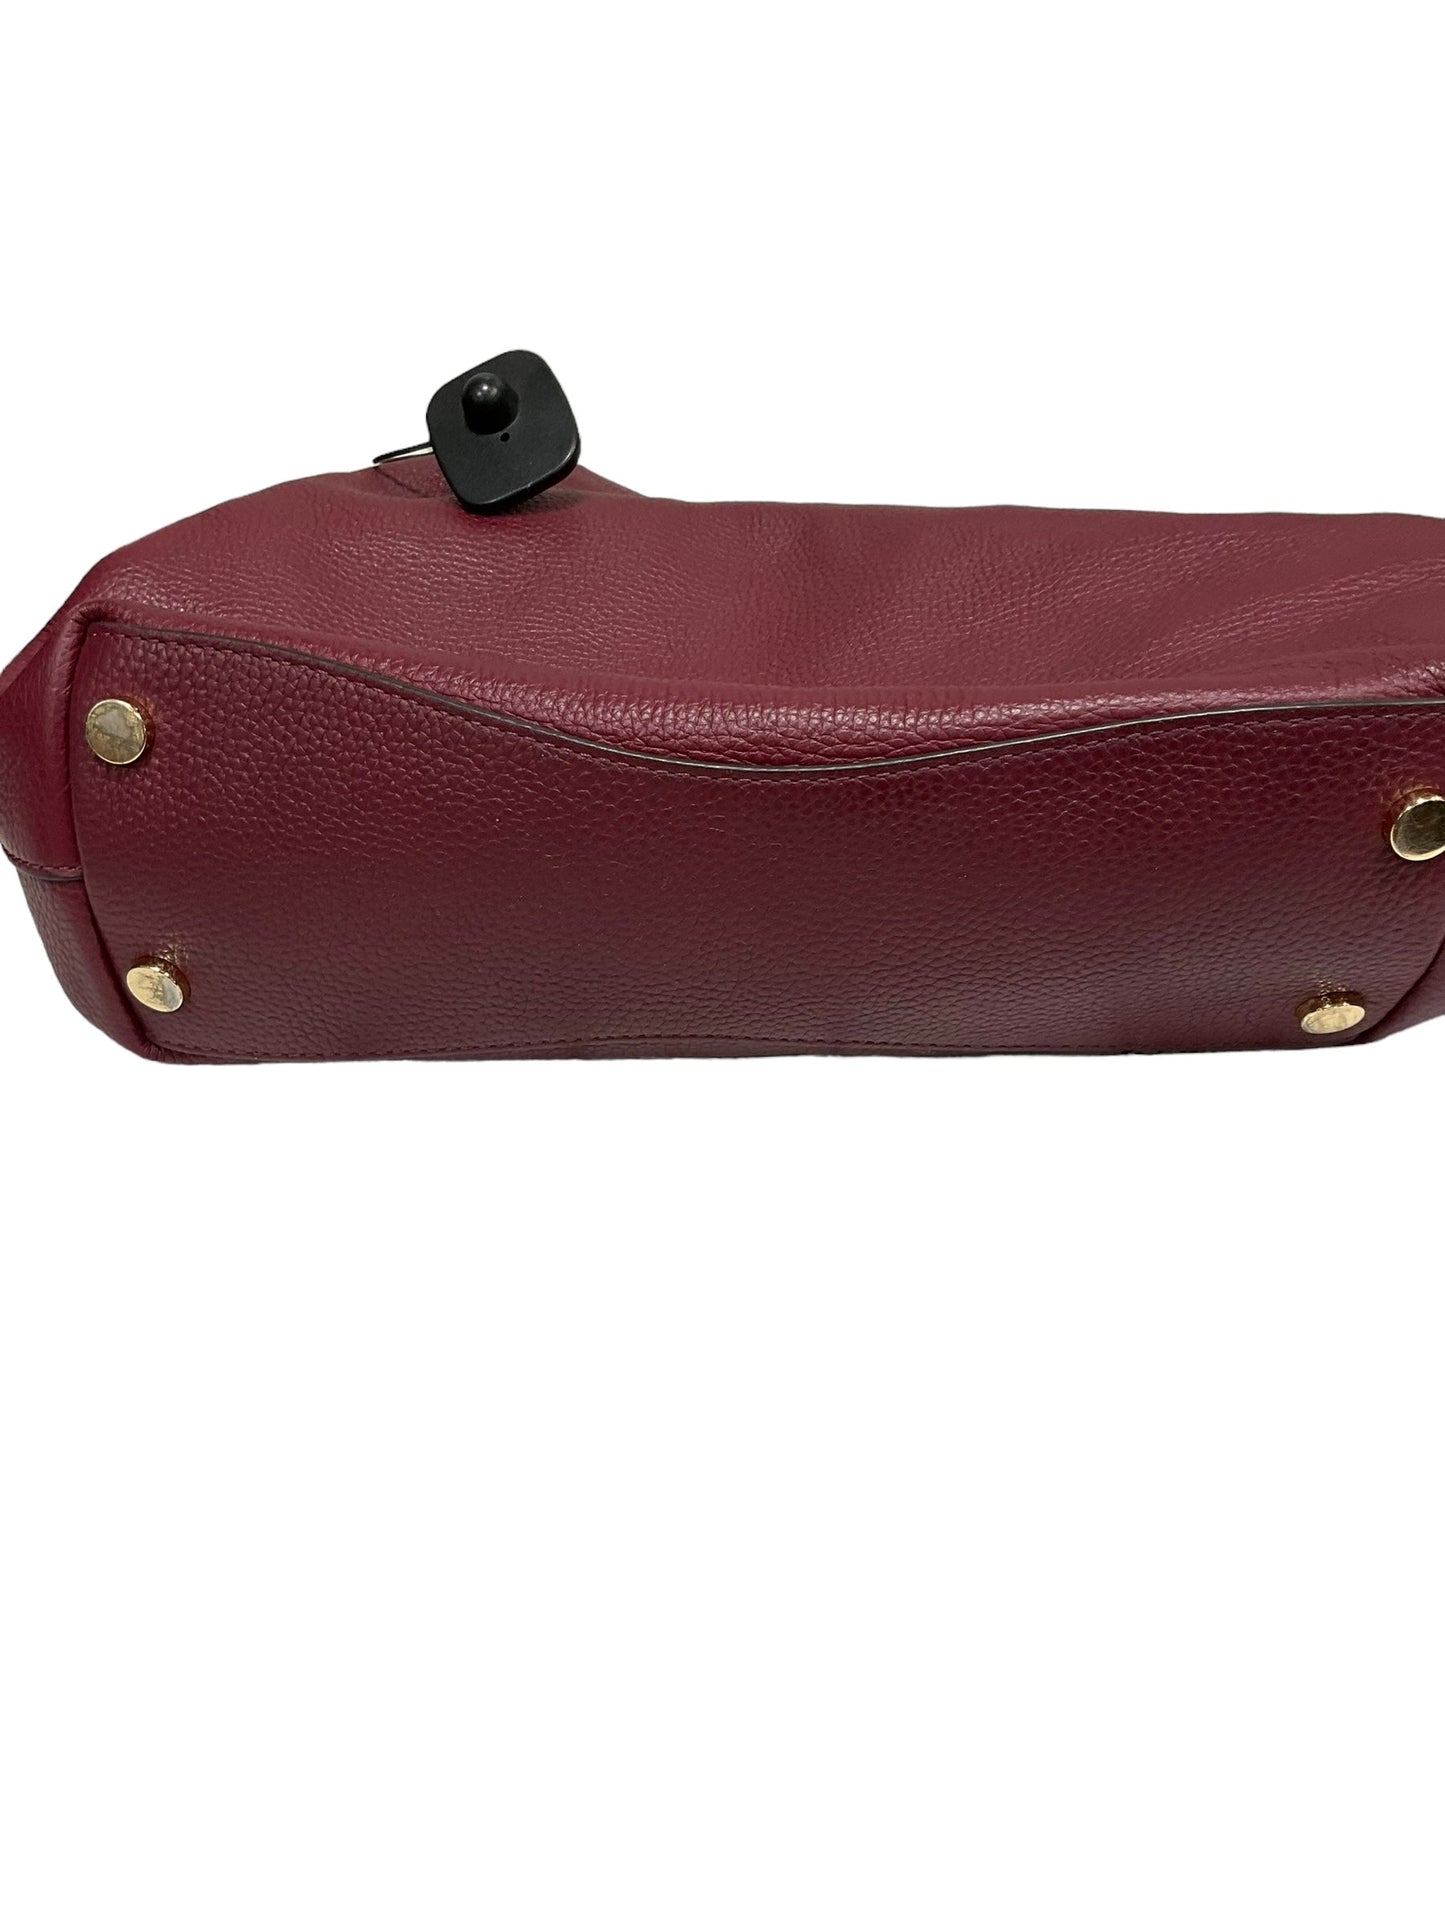 Red Handbag Leather Michael Kors, Size Medium